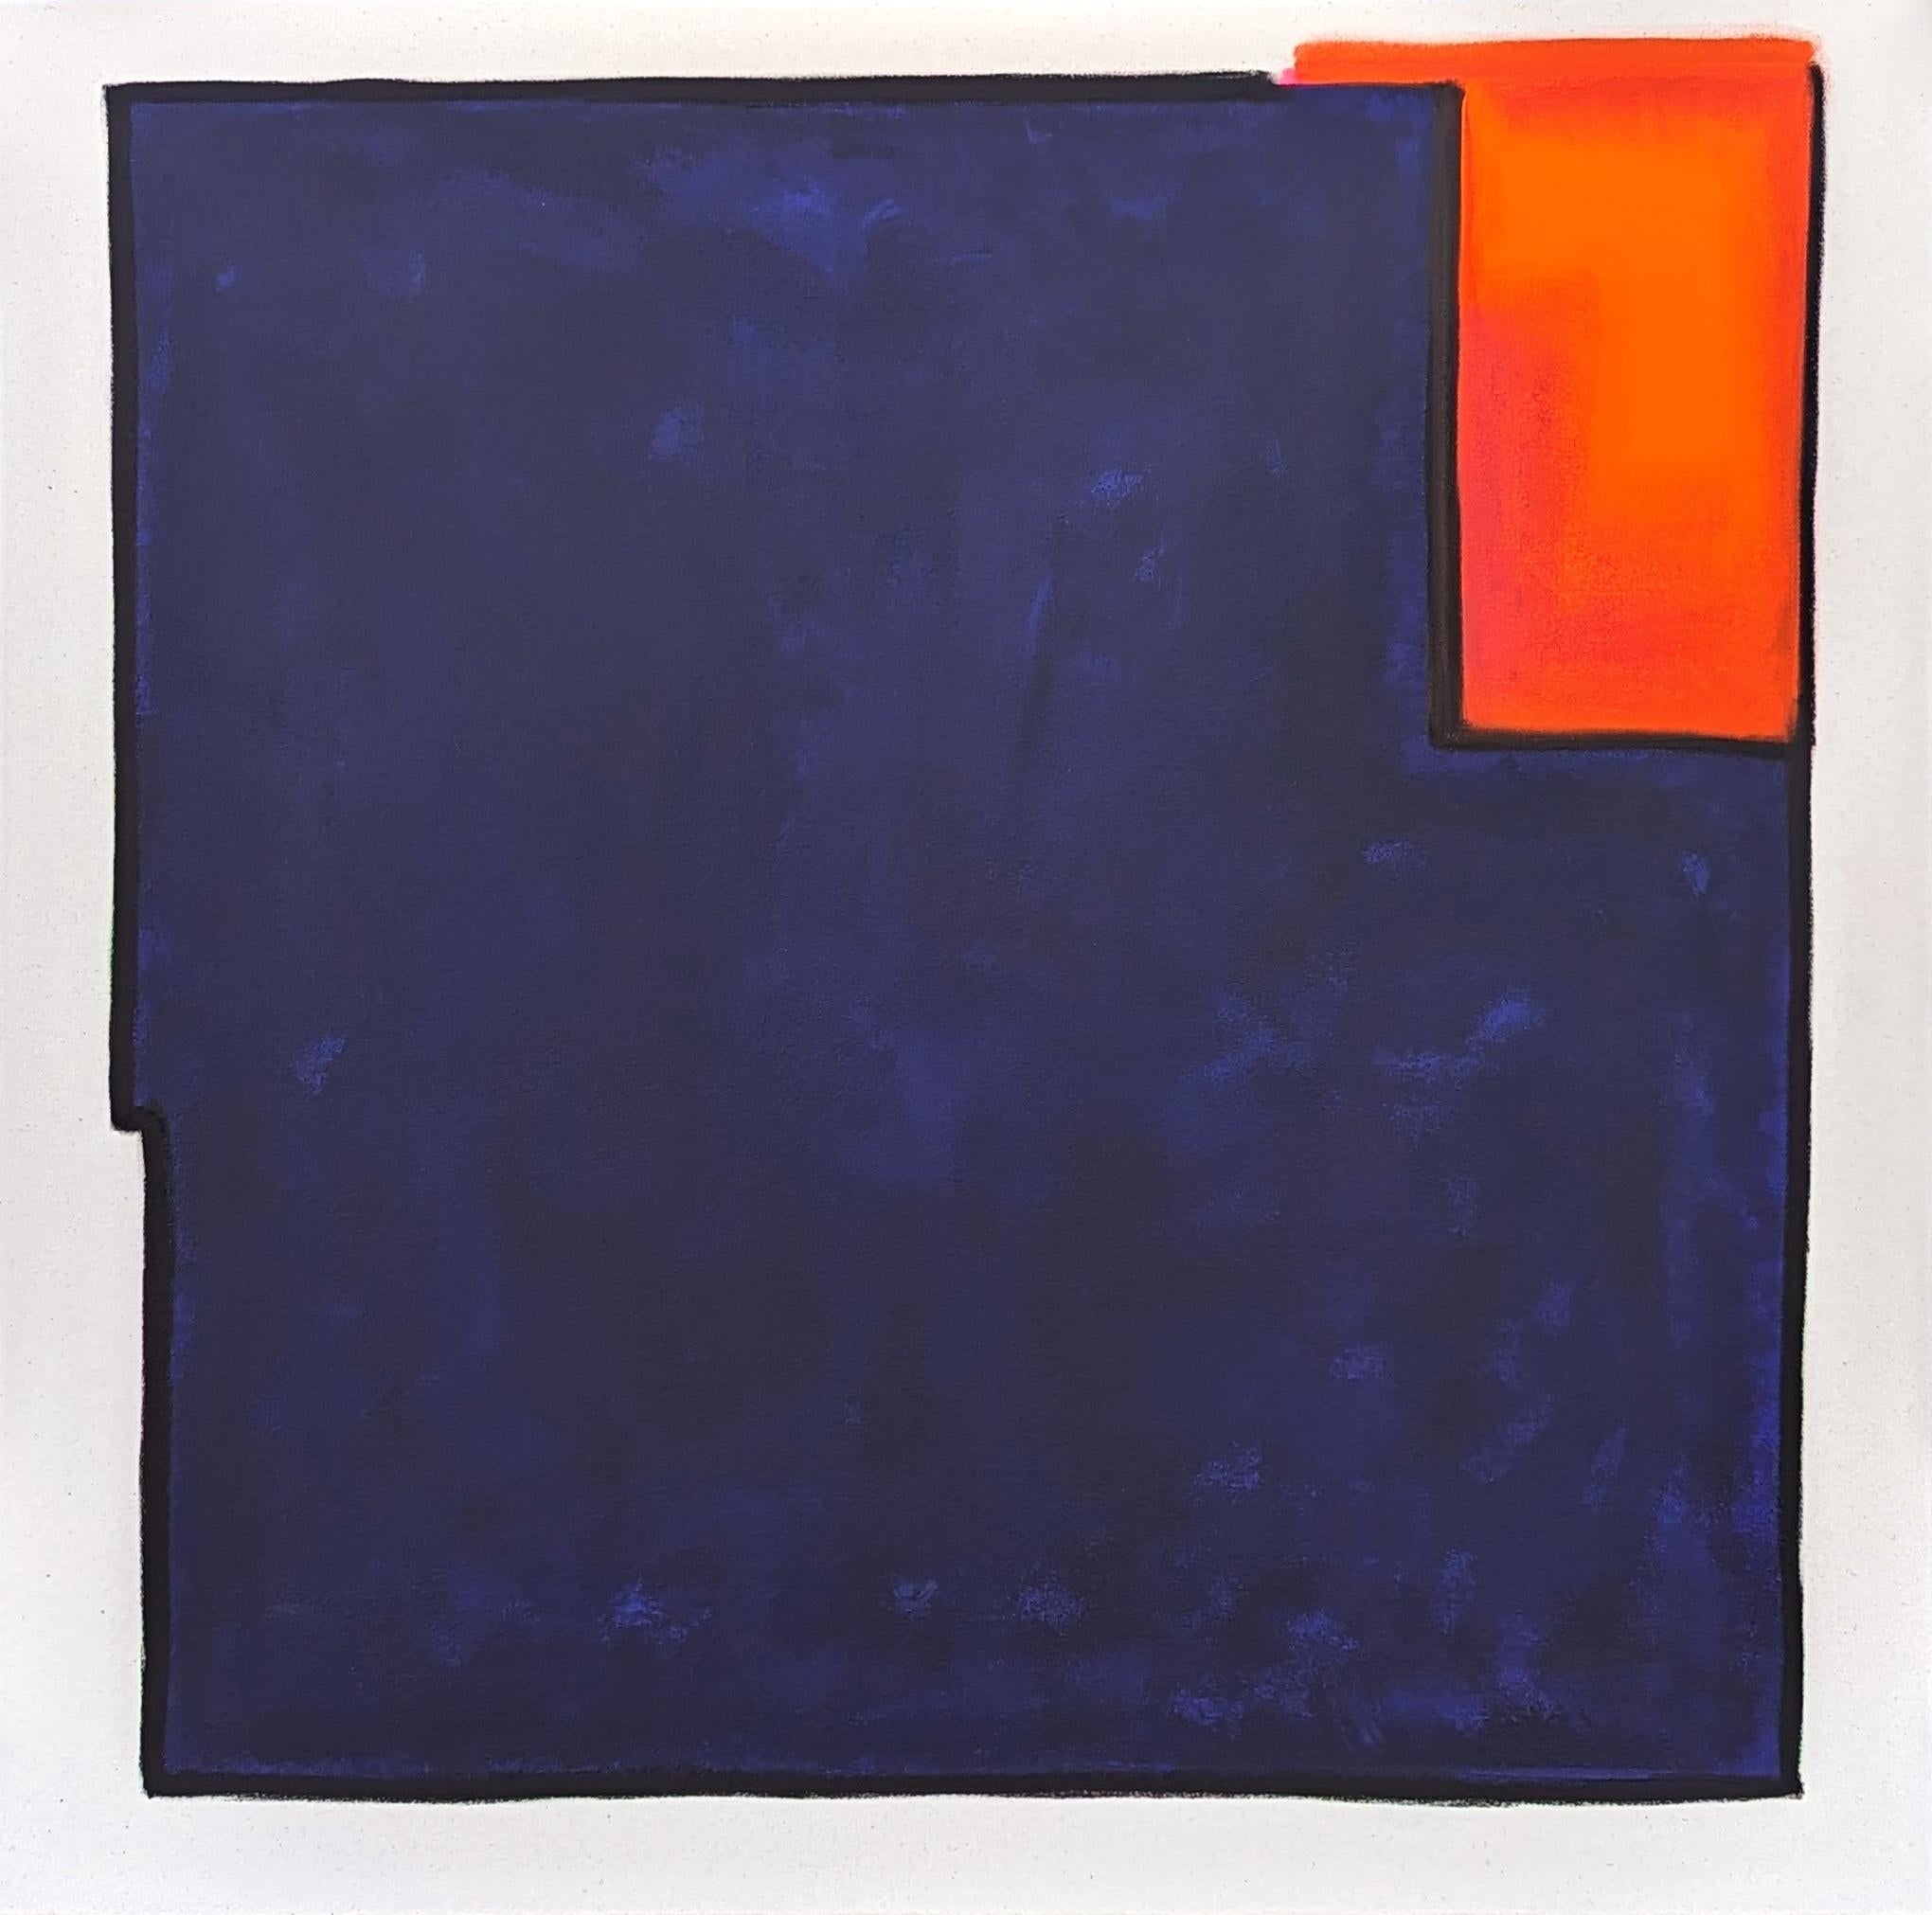 Gary Griffin Landscape Painting - "Mixed Use Development" Contemporary Orange & Blue Geometric Hard-Edge Painting